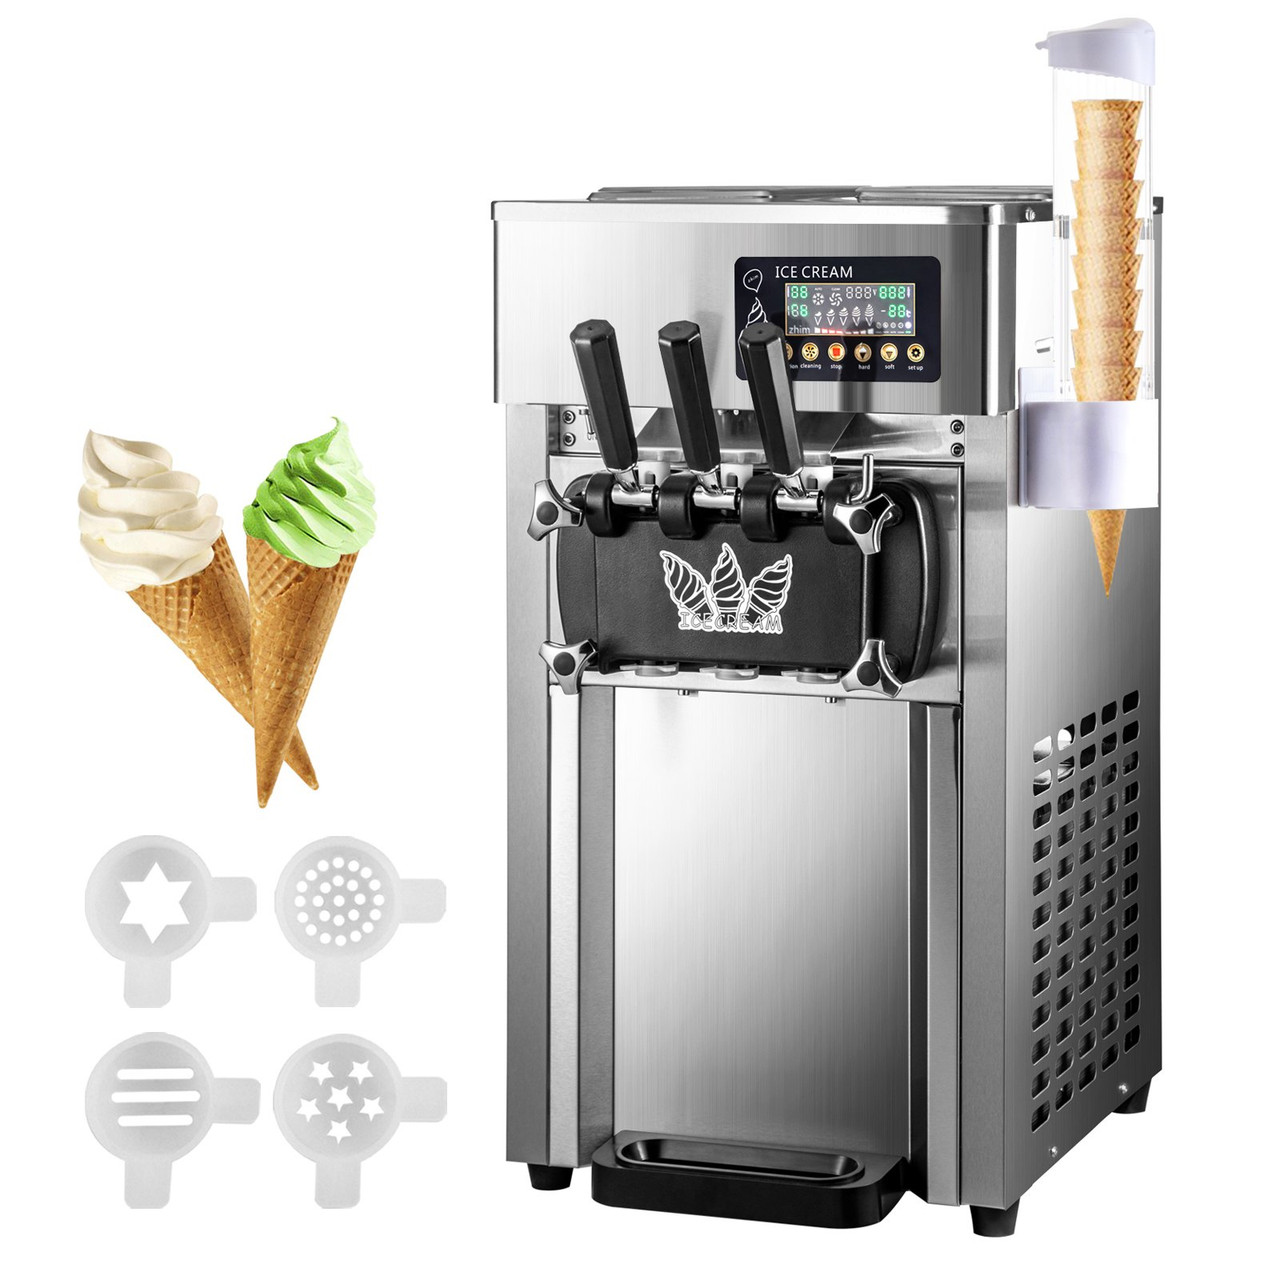 USA Commercial 5 flavors soft serve ice cream machine,gelato ice